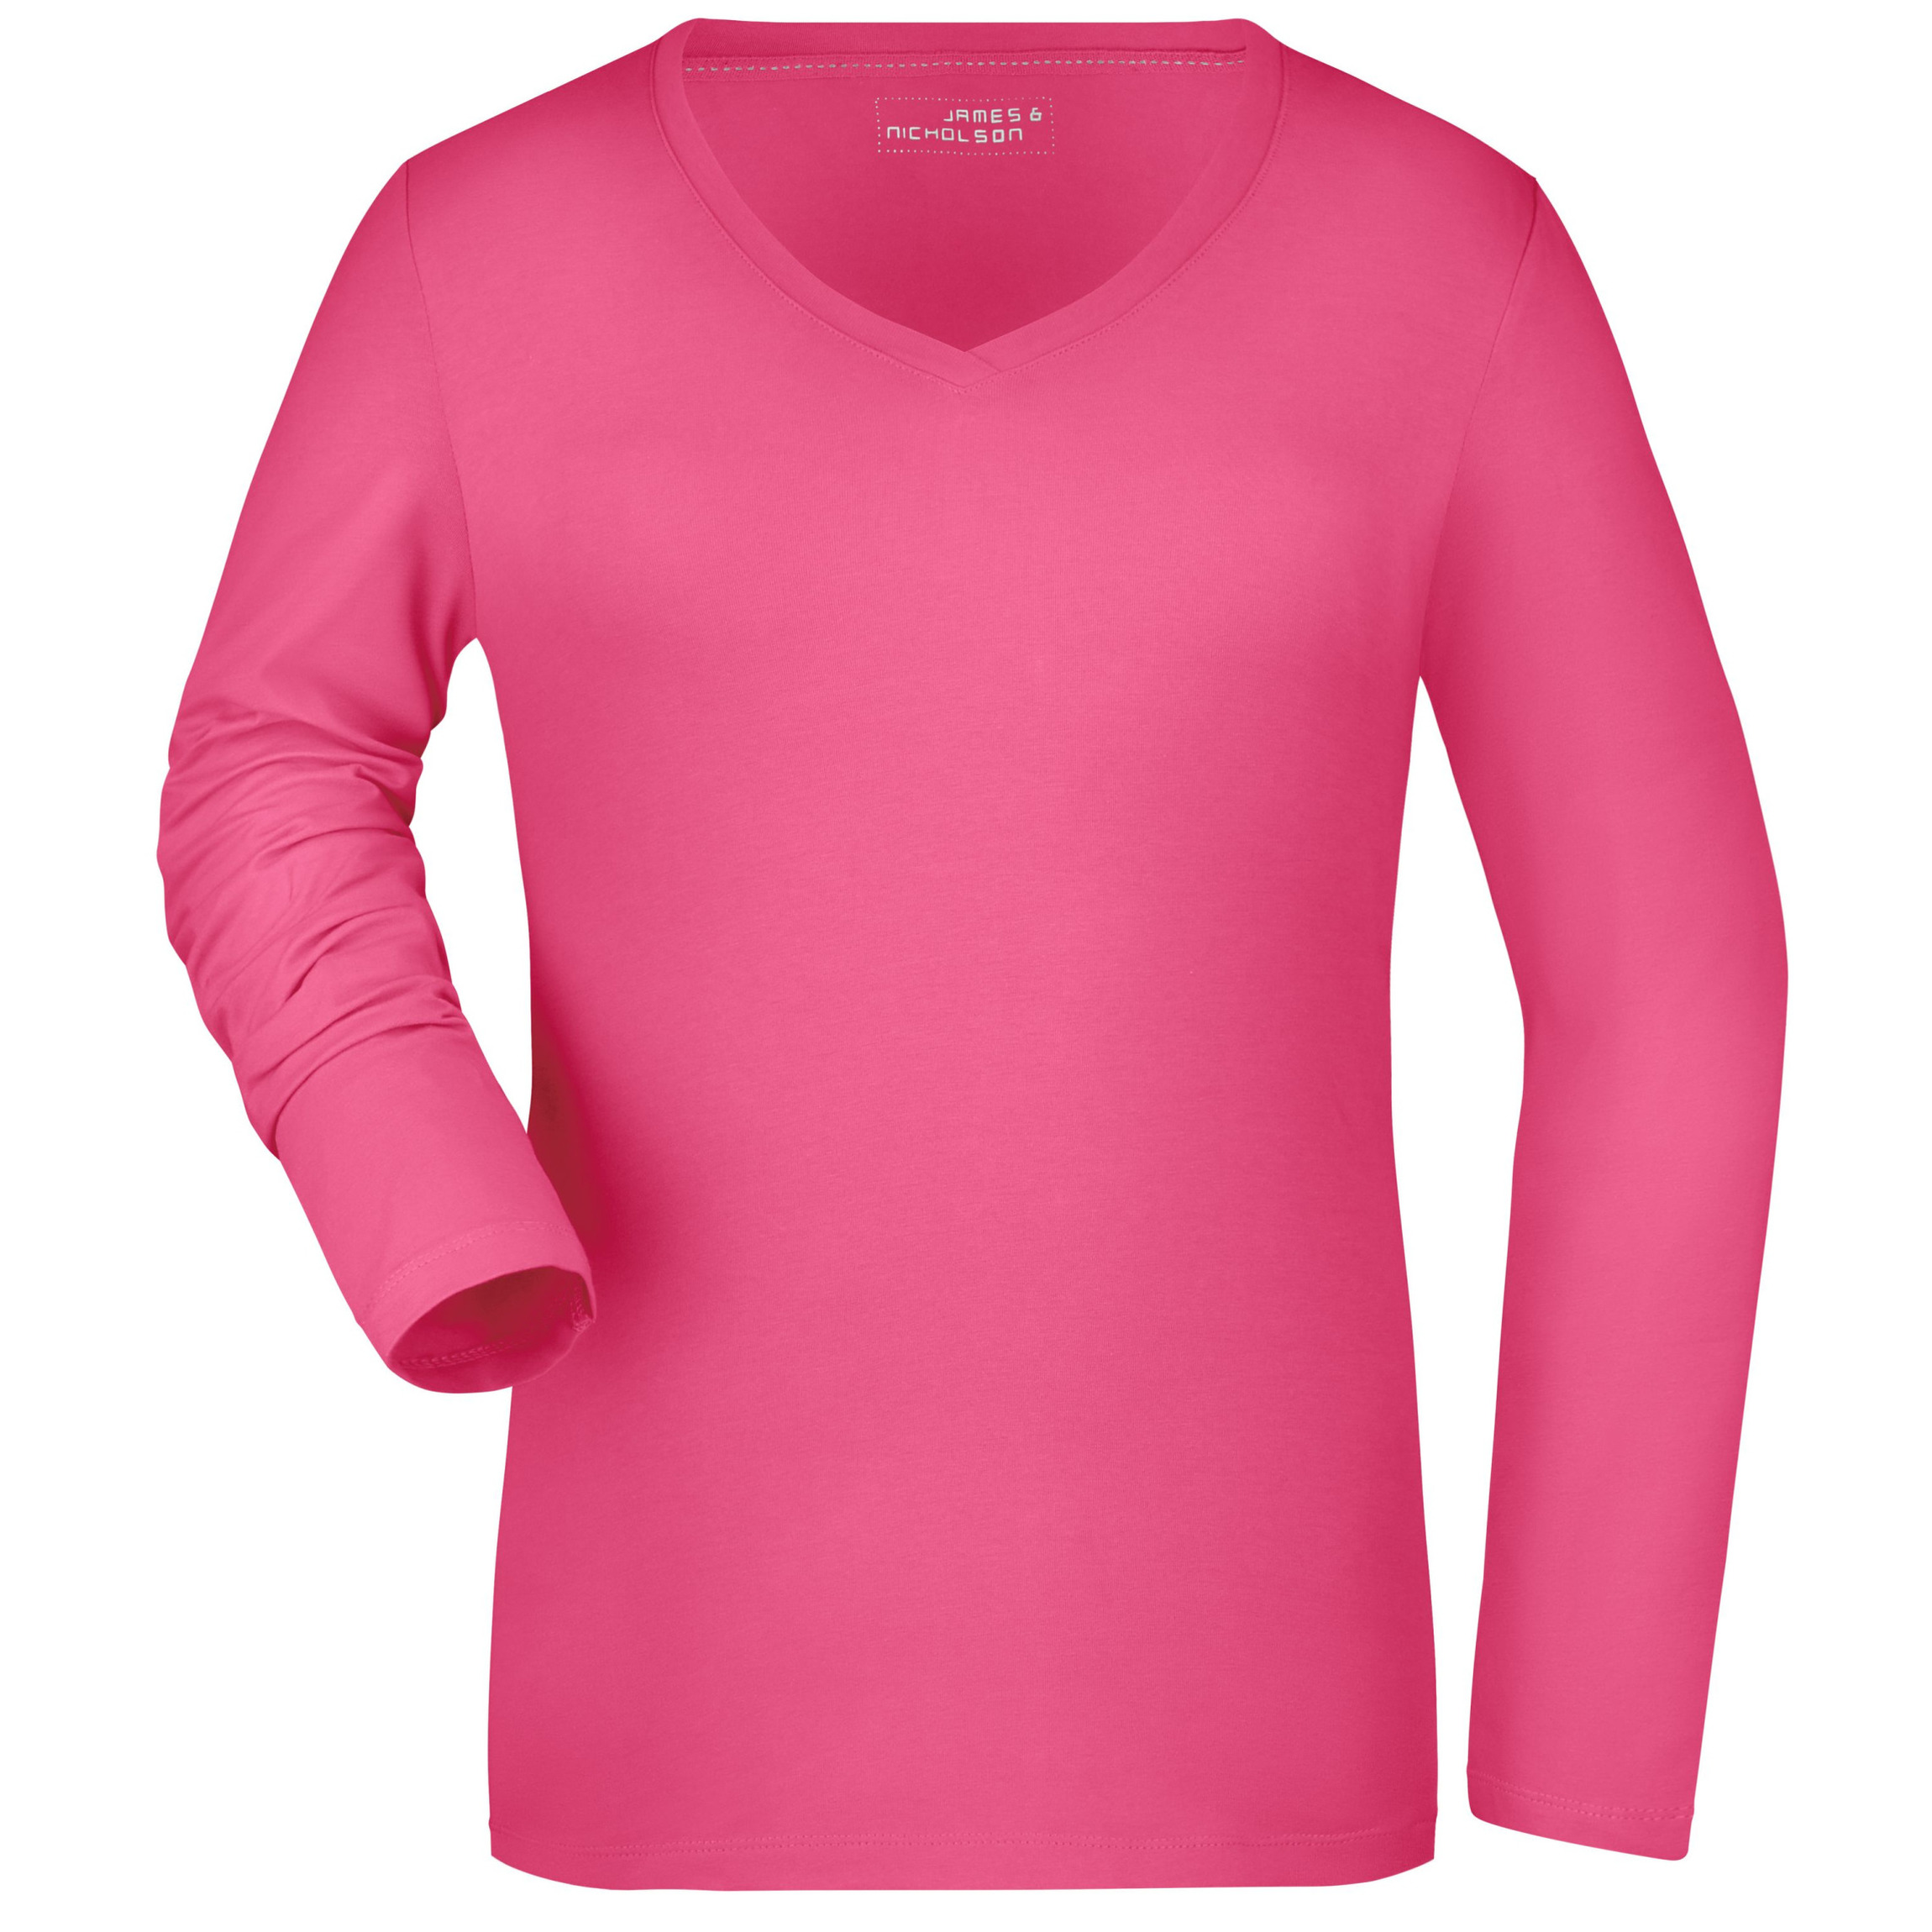 Roze dames stretch shirts lange mouw kopen